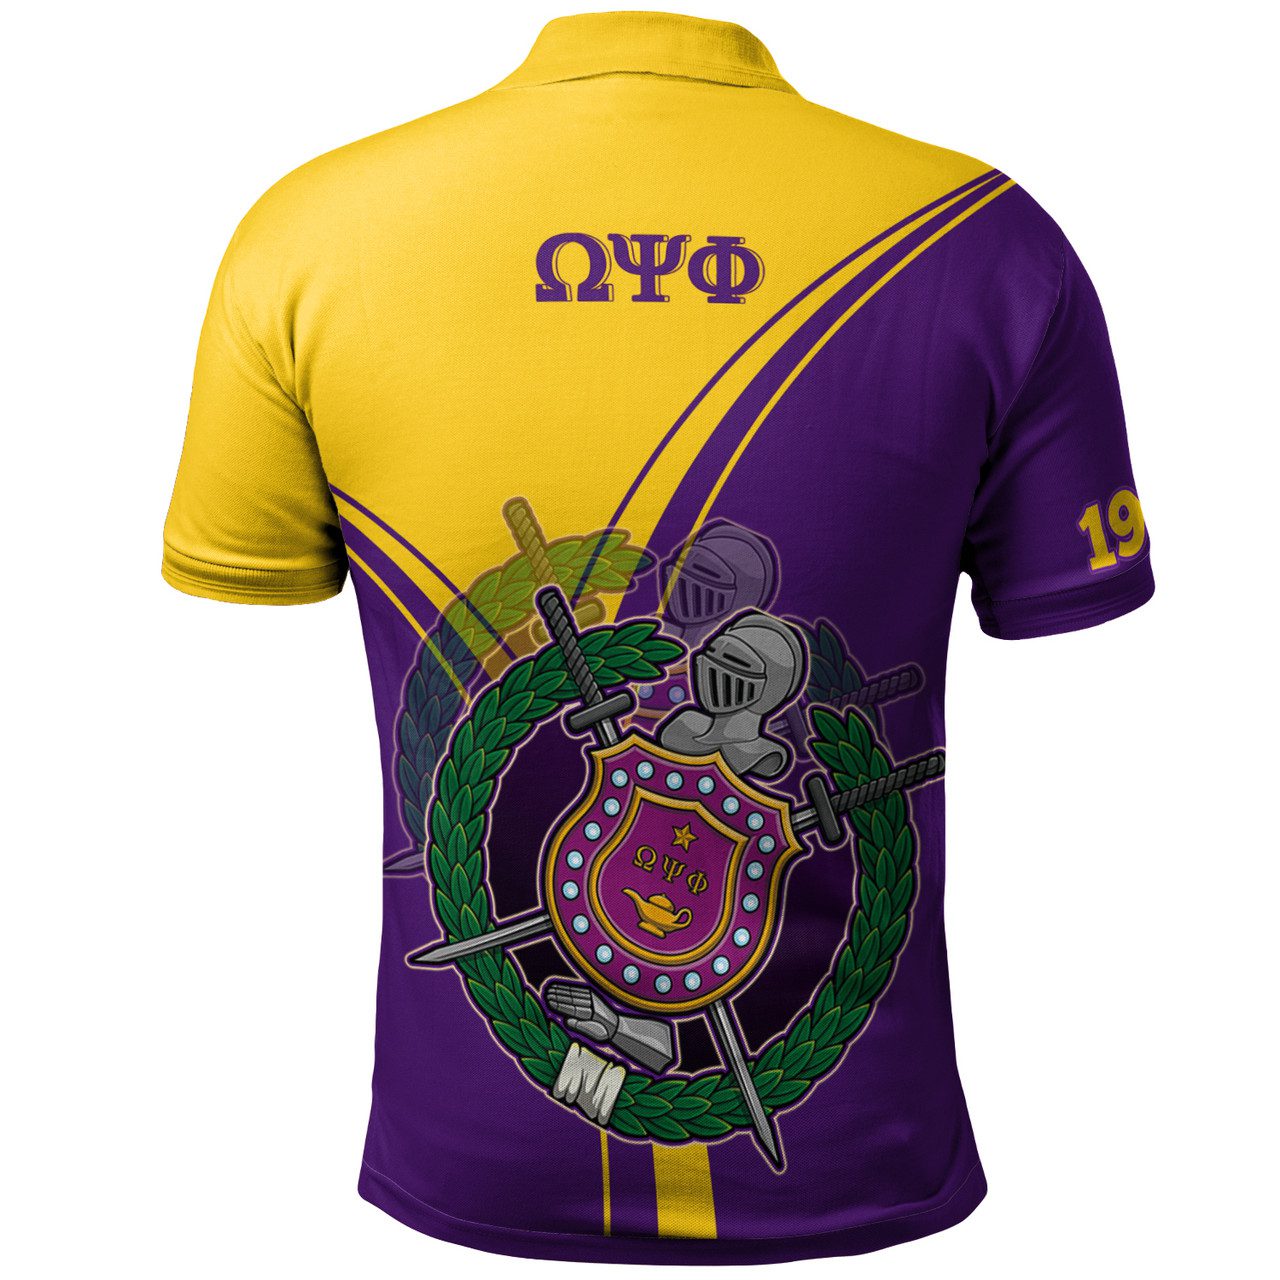 Omega Psi Phi Polo Shirt – Fraternity Omega Psi Phi Pride Version Polo Shirt